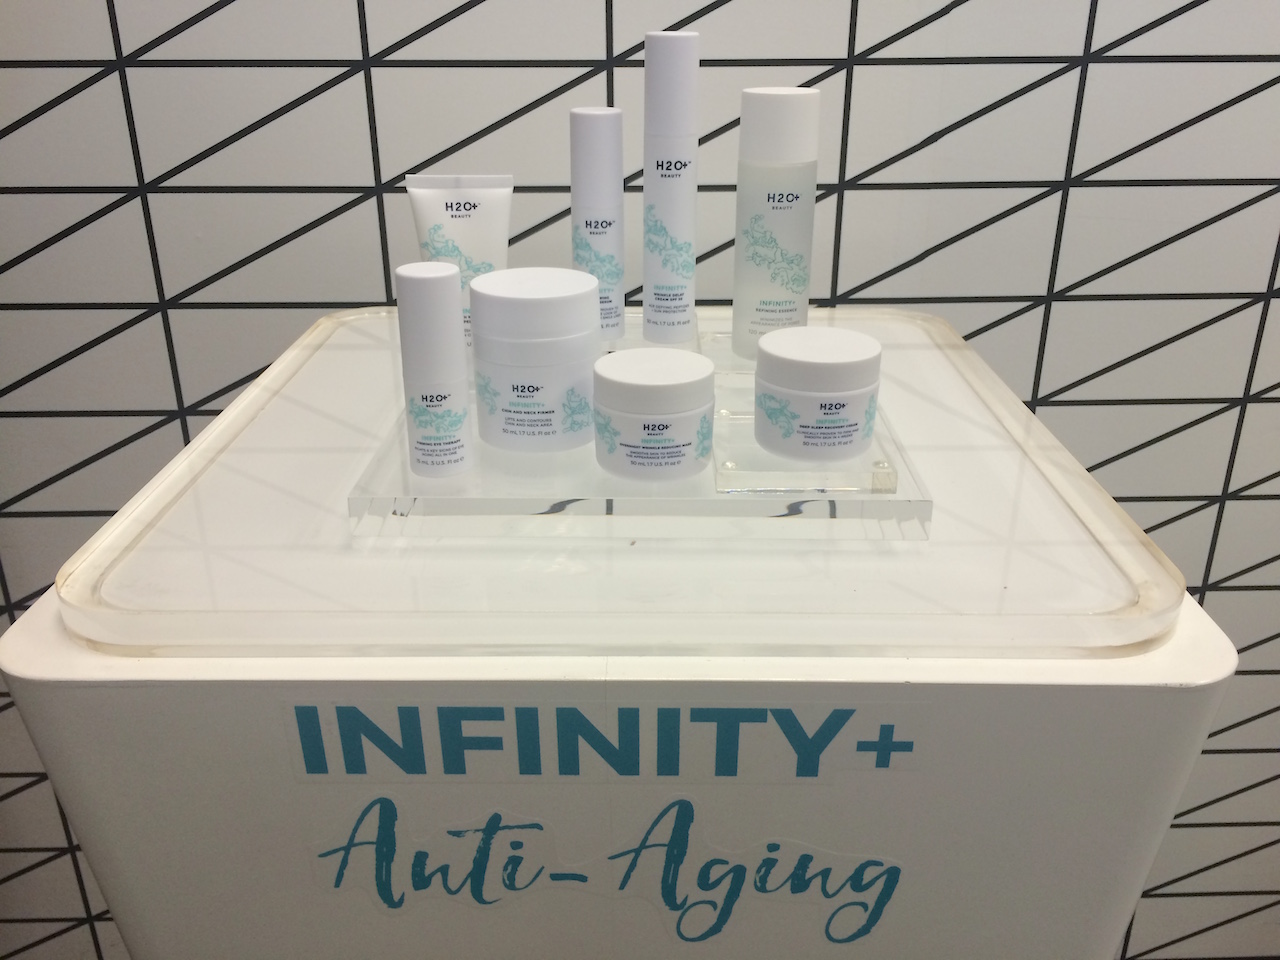 Infinity+ range for anti-aging